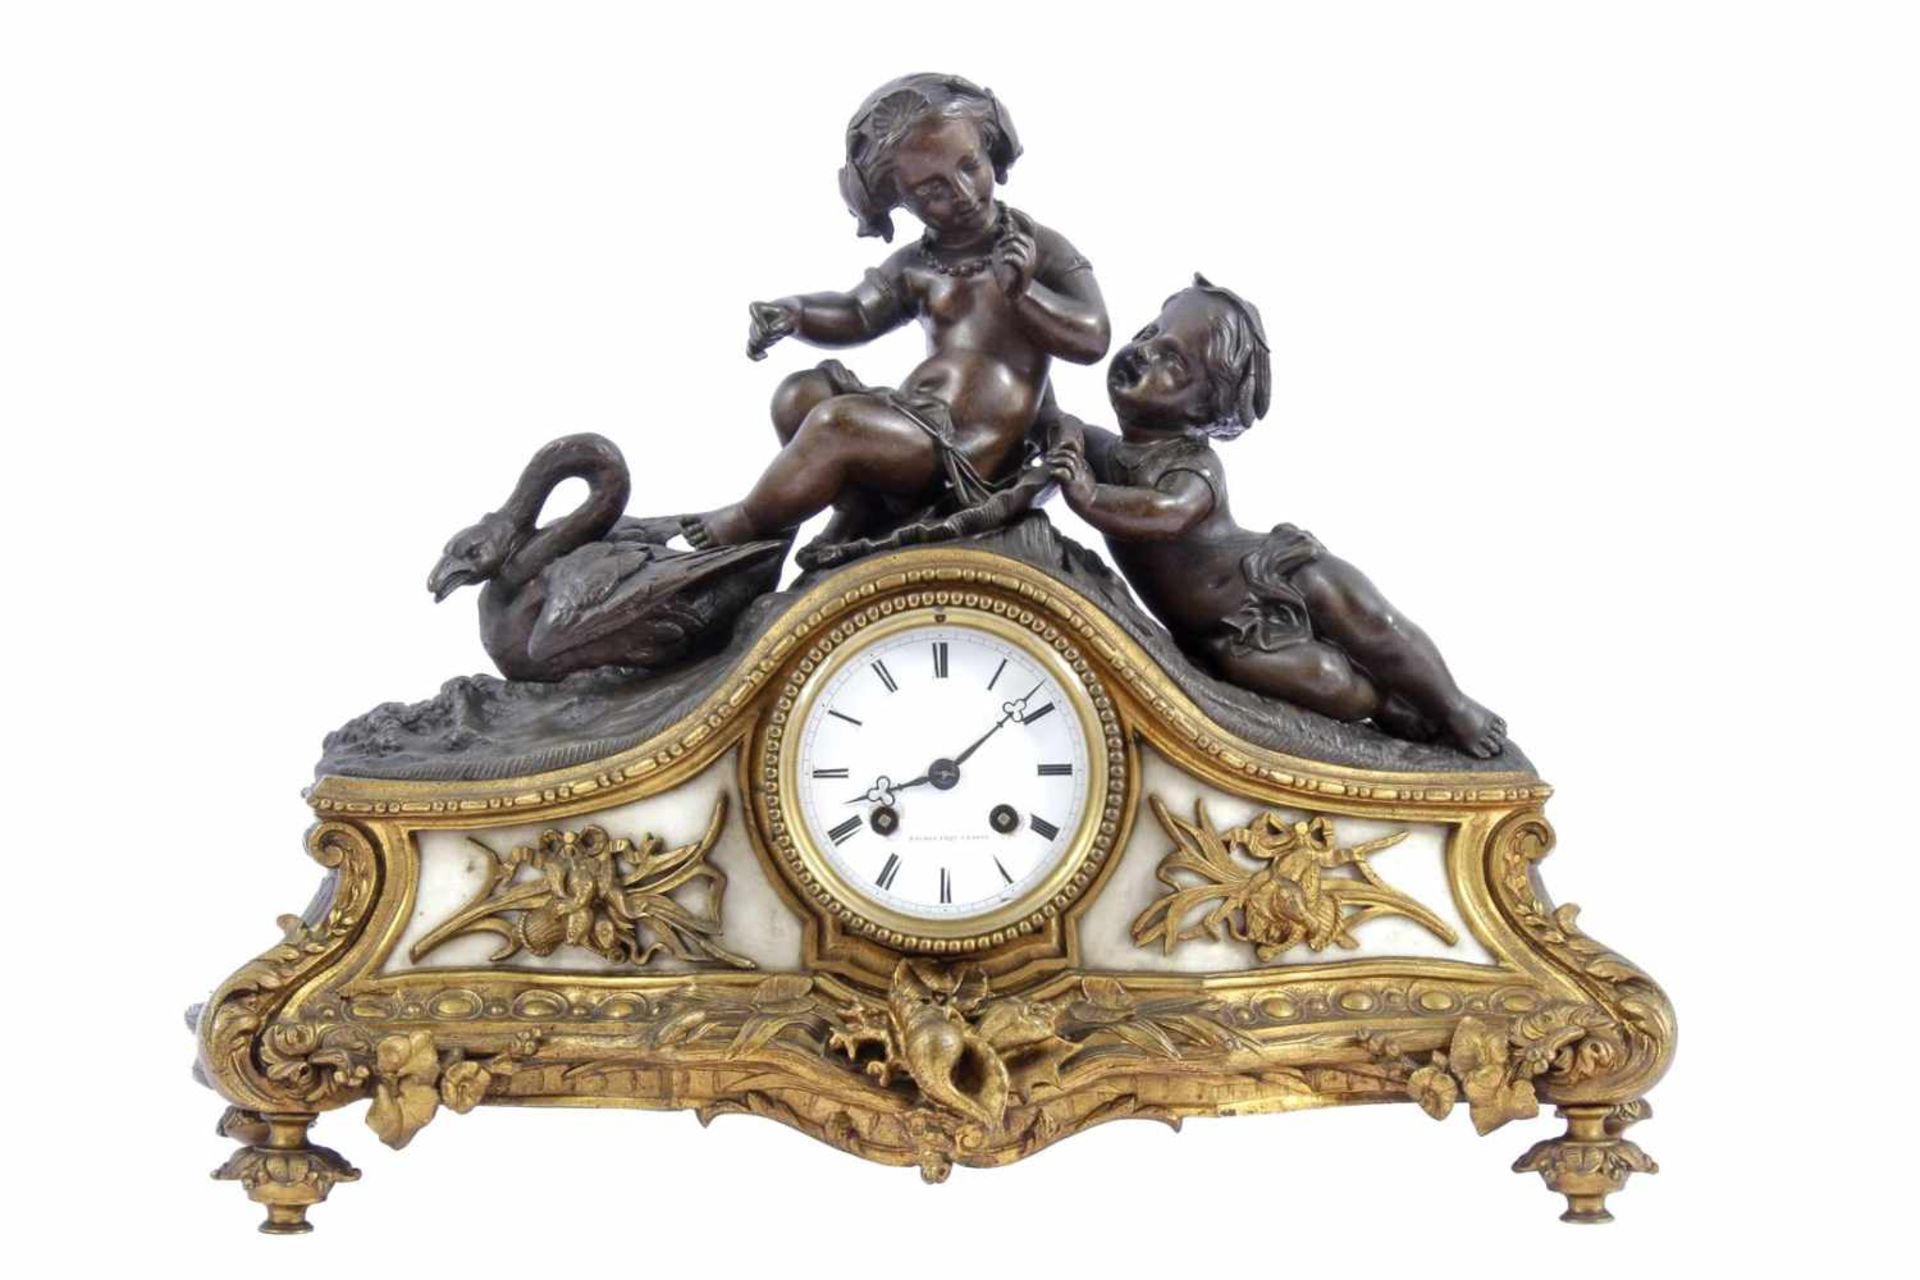 Signature Raingo Fres a Paris, copper 19th century mantel clock, decorated with flowers, shells,